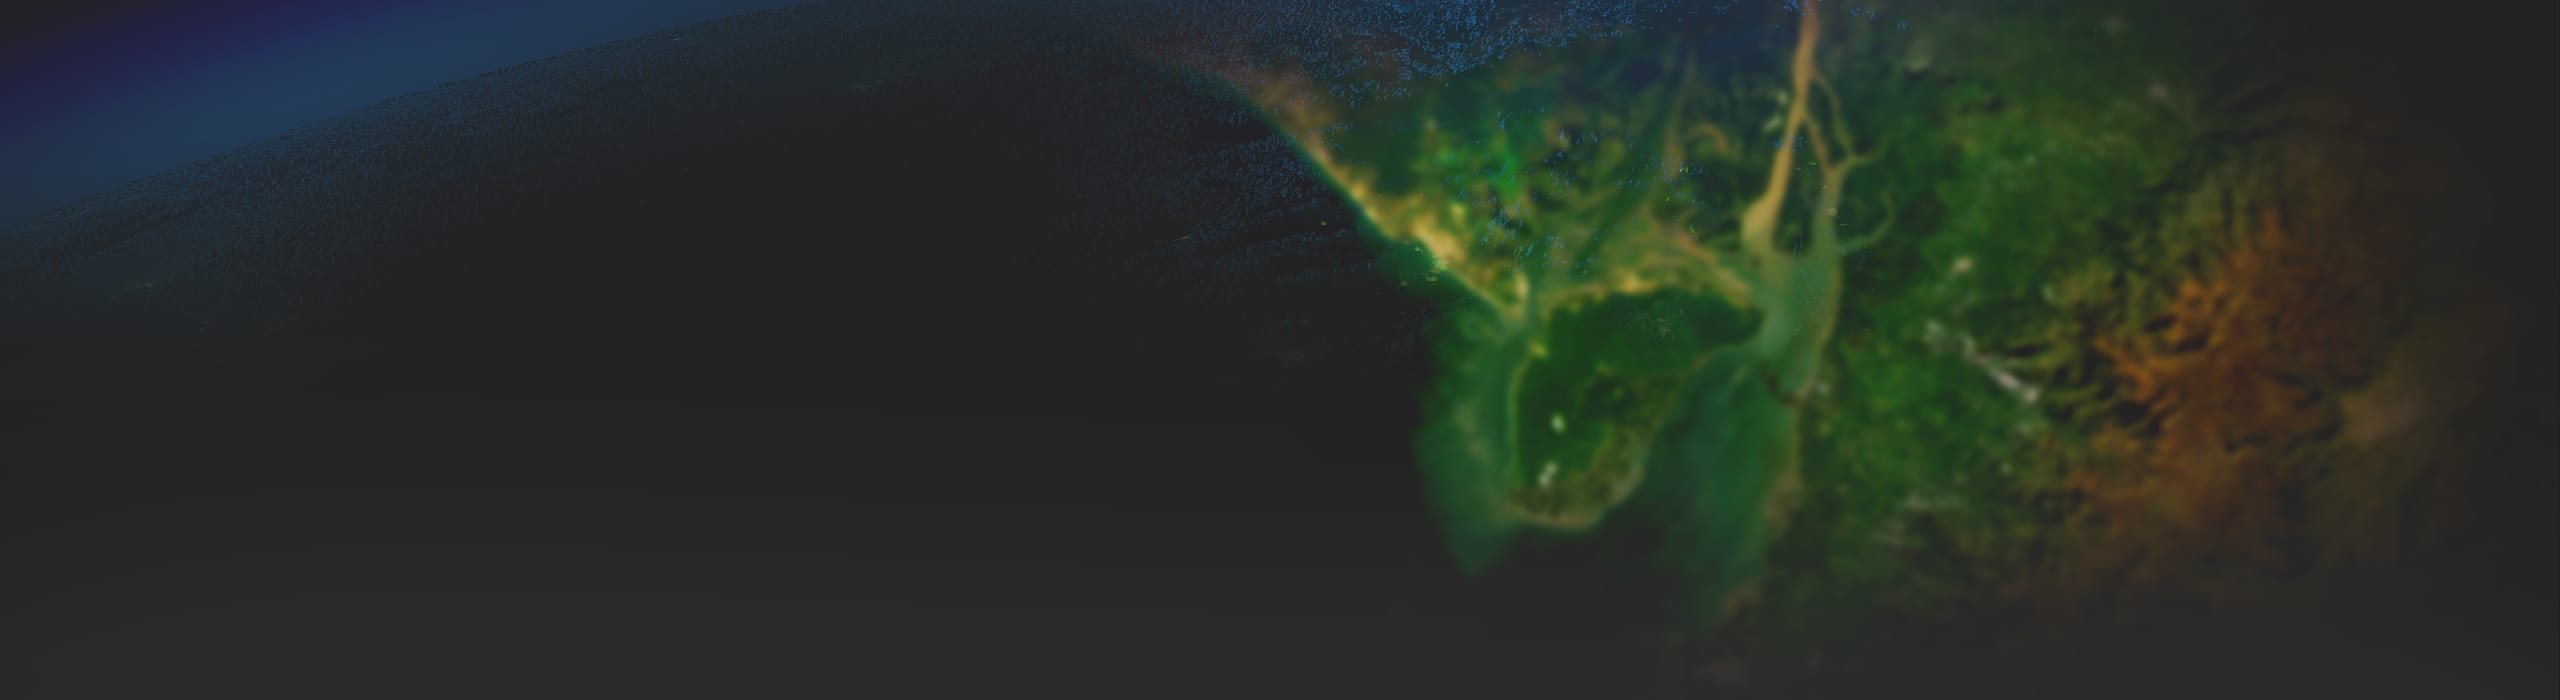 A black background fades into a satellite image of a green coastal landscape